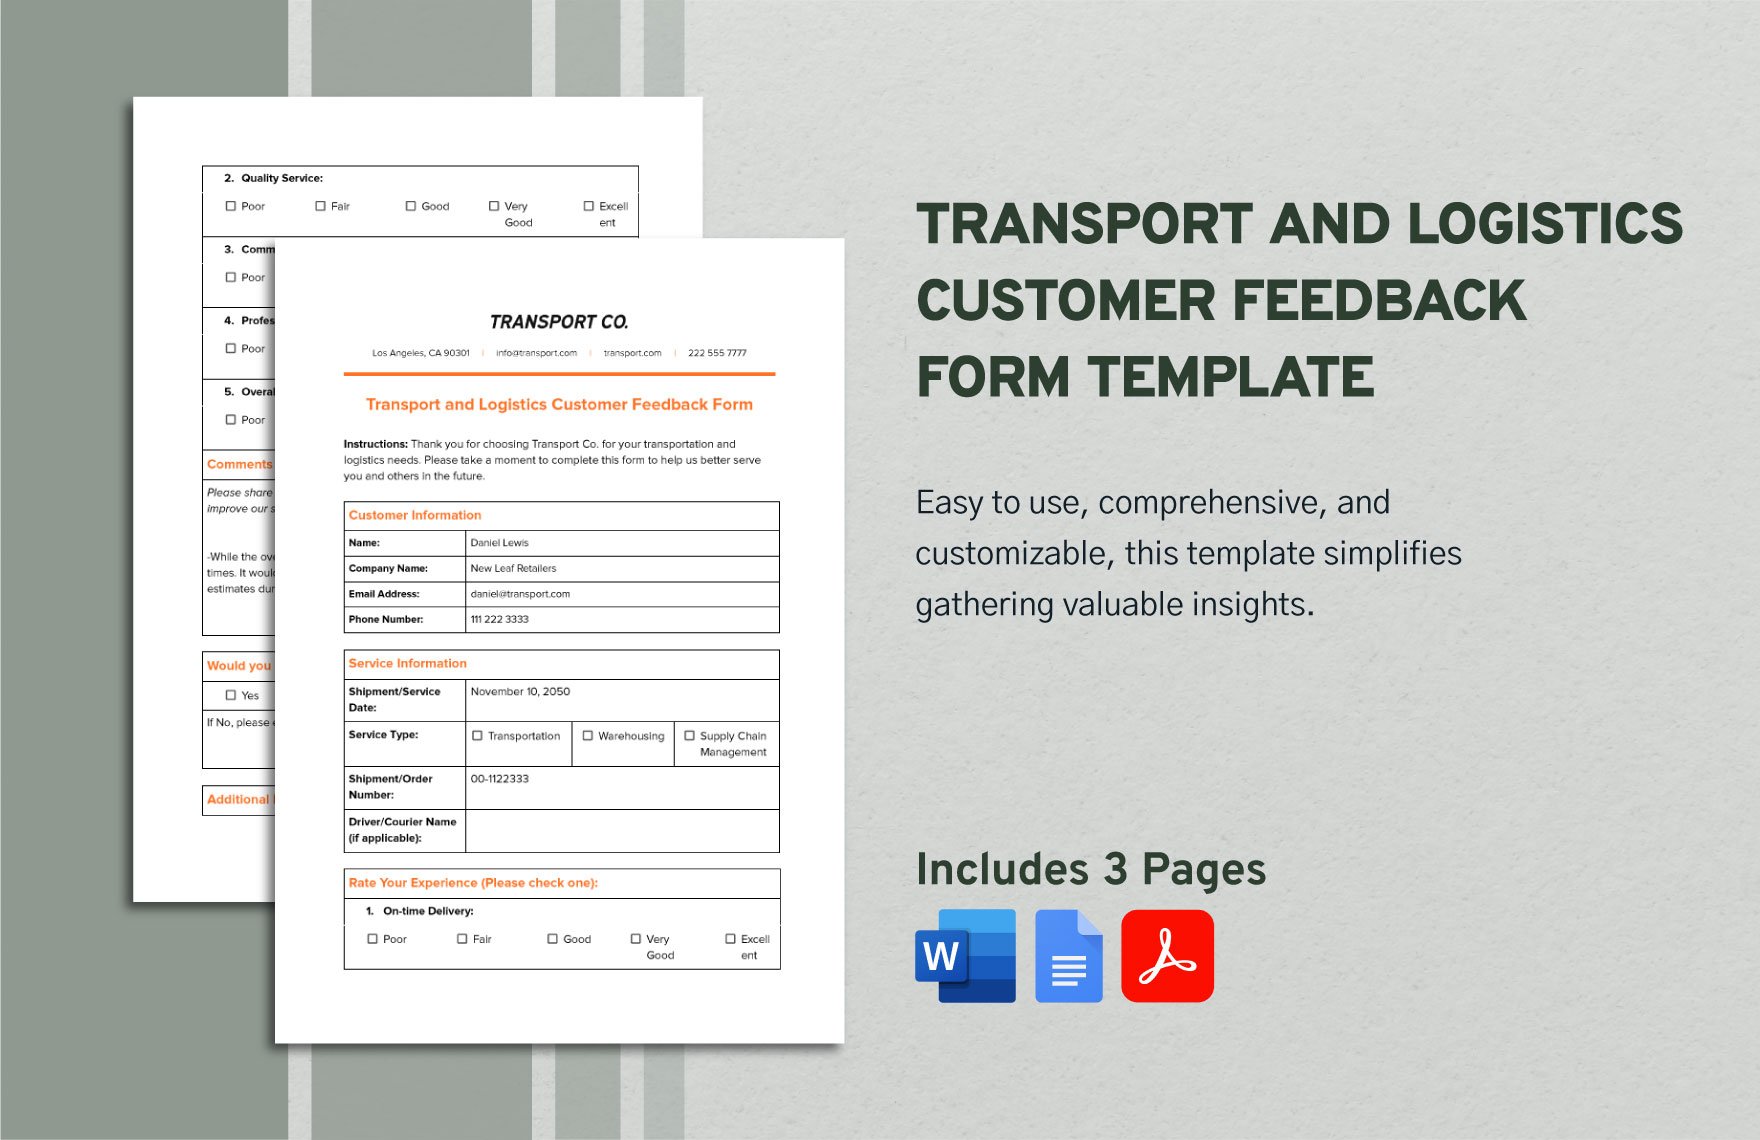 Transport and Logistics Customer Feedback Form Template